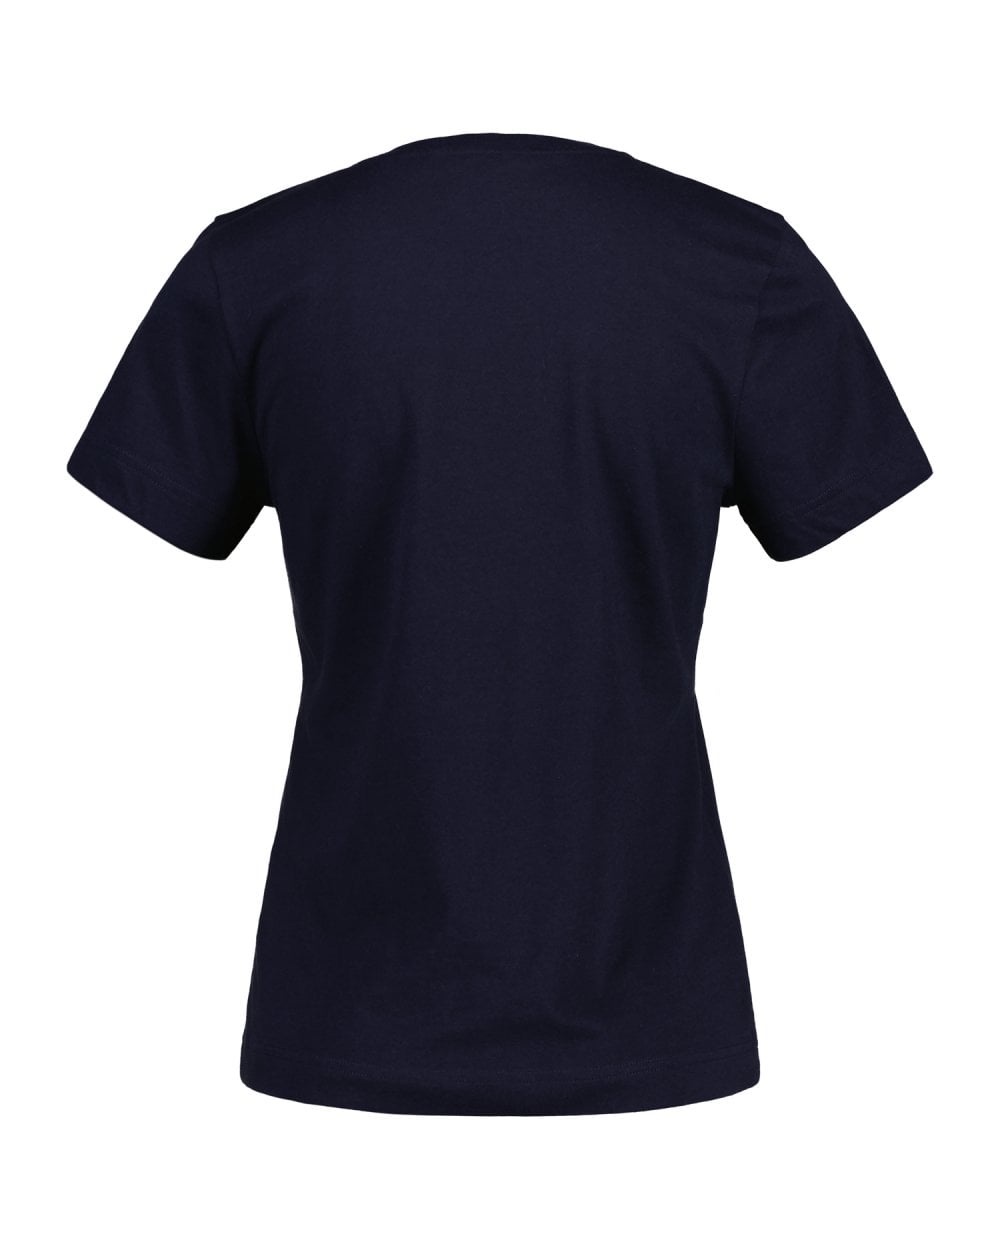 Tonal Graphic T-Shirt